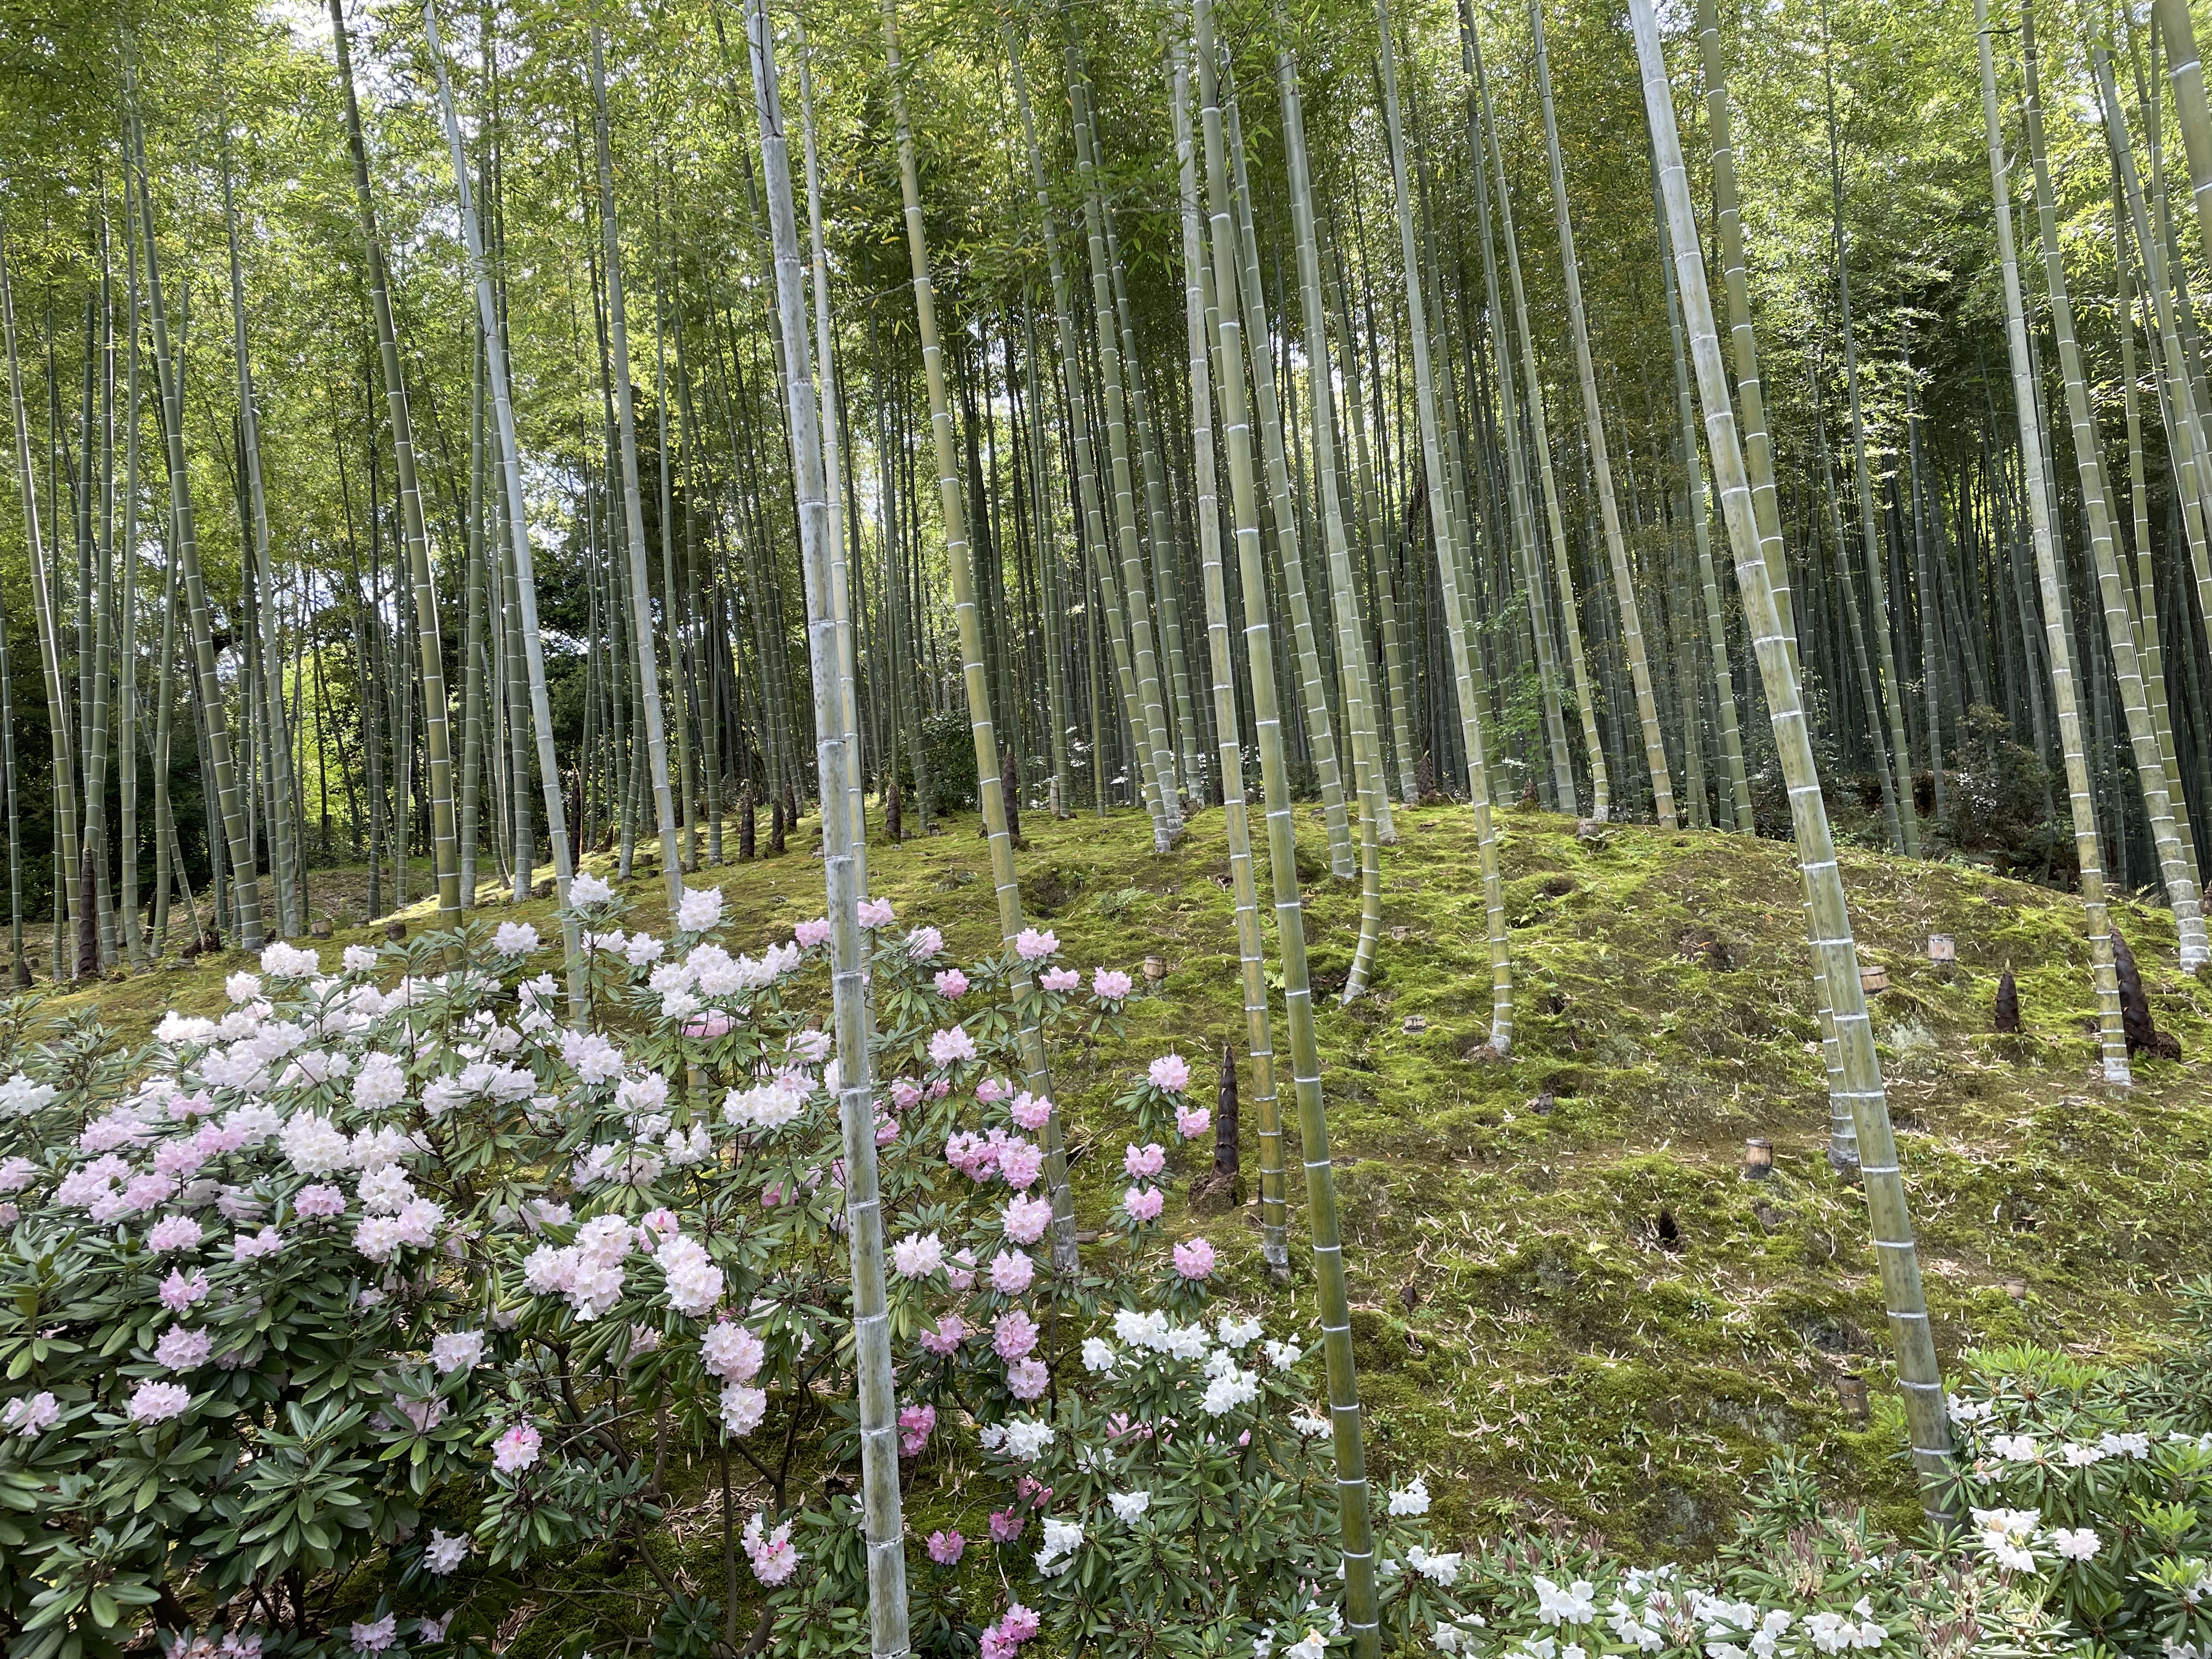 Bamboo forest in Tenryu-Ji temple